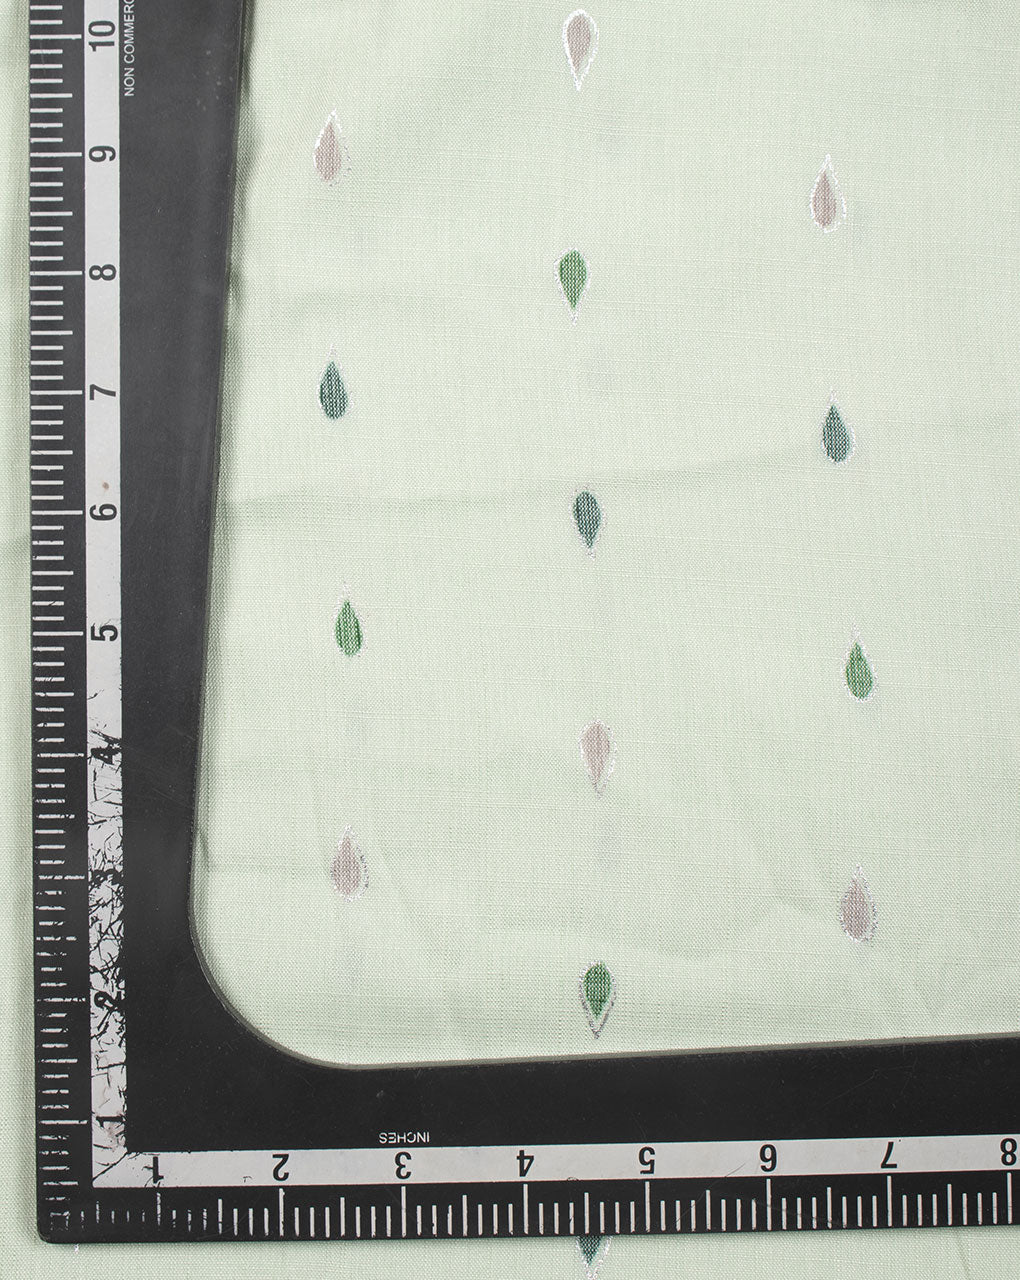 Foil Screen Print Slub Rayon Fabric - Fabriclore.com